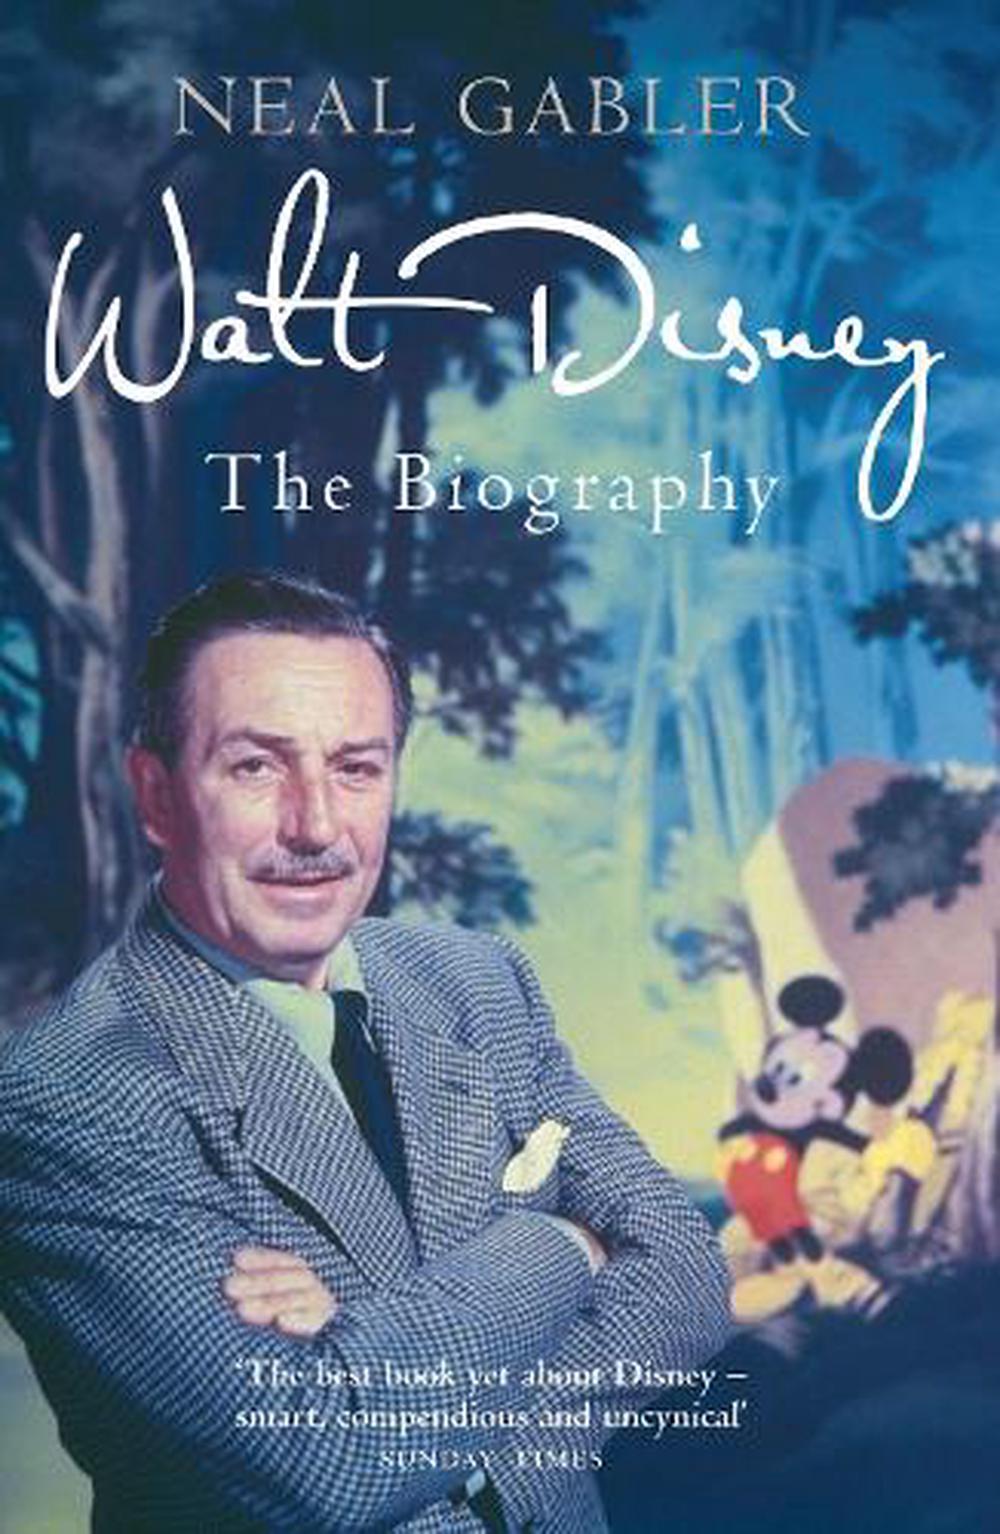 biography.com walt disney